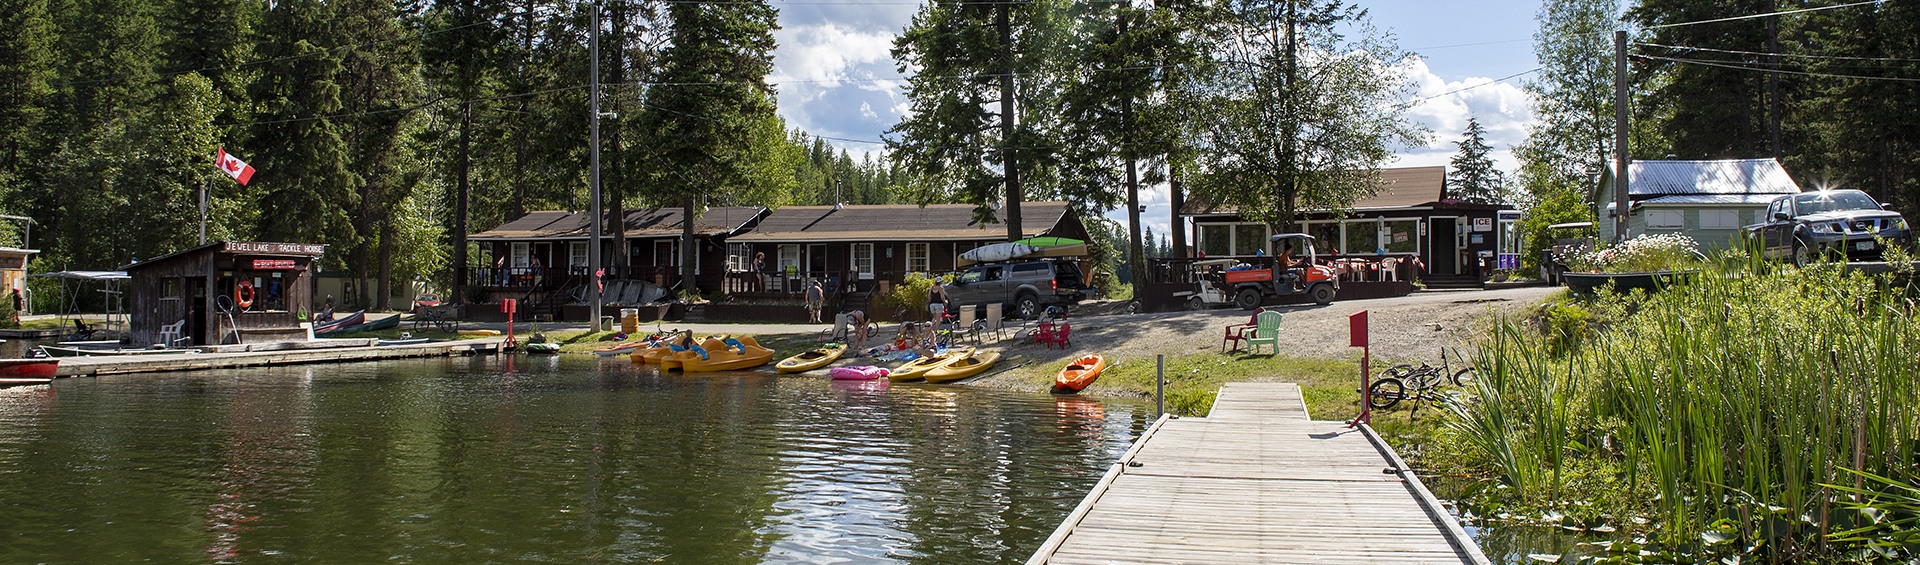 Water activities 447, Jewel Lake Resort, near Greenwood, summer, Boundary, activities, Darren Robinson